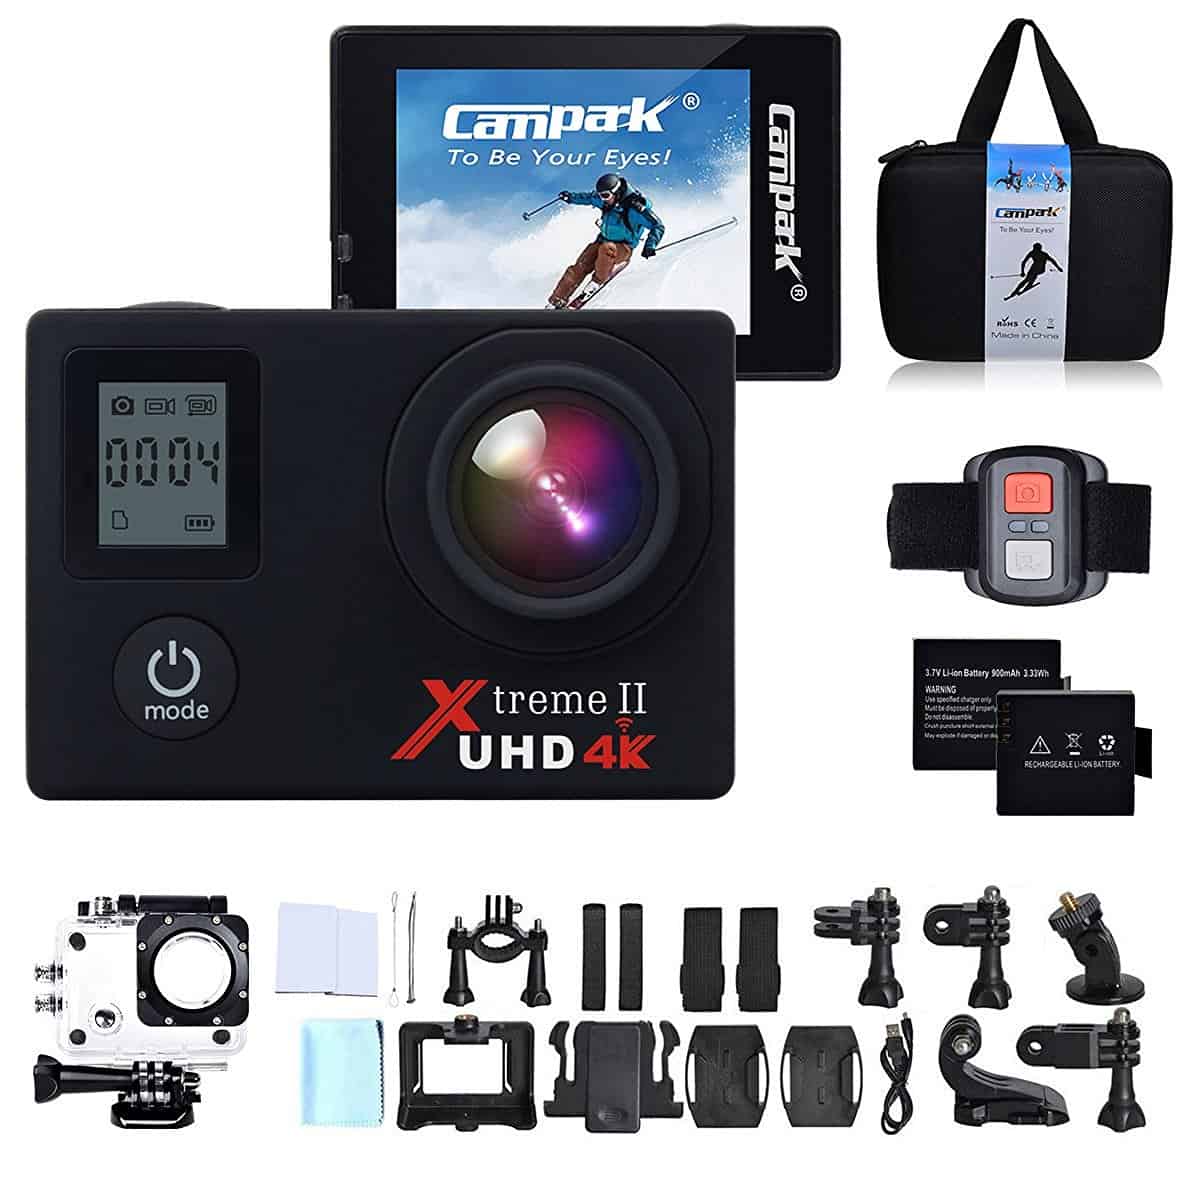 Compark Camera and Accessories